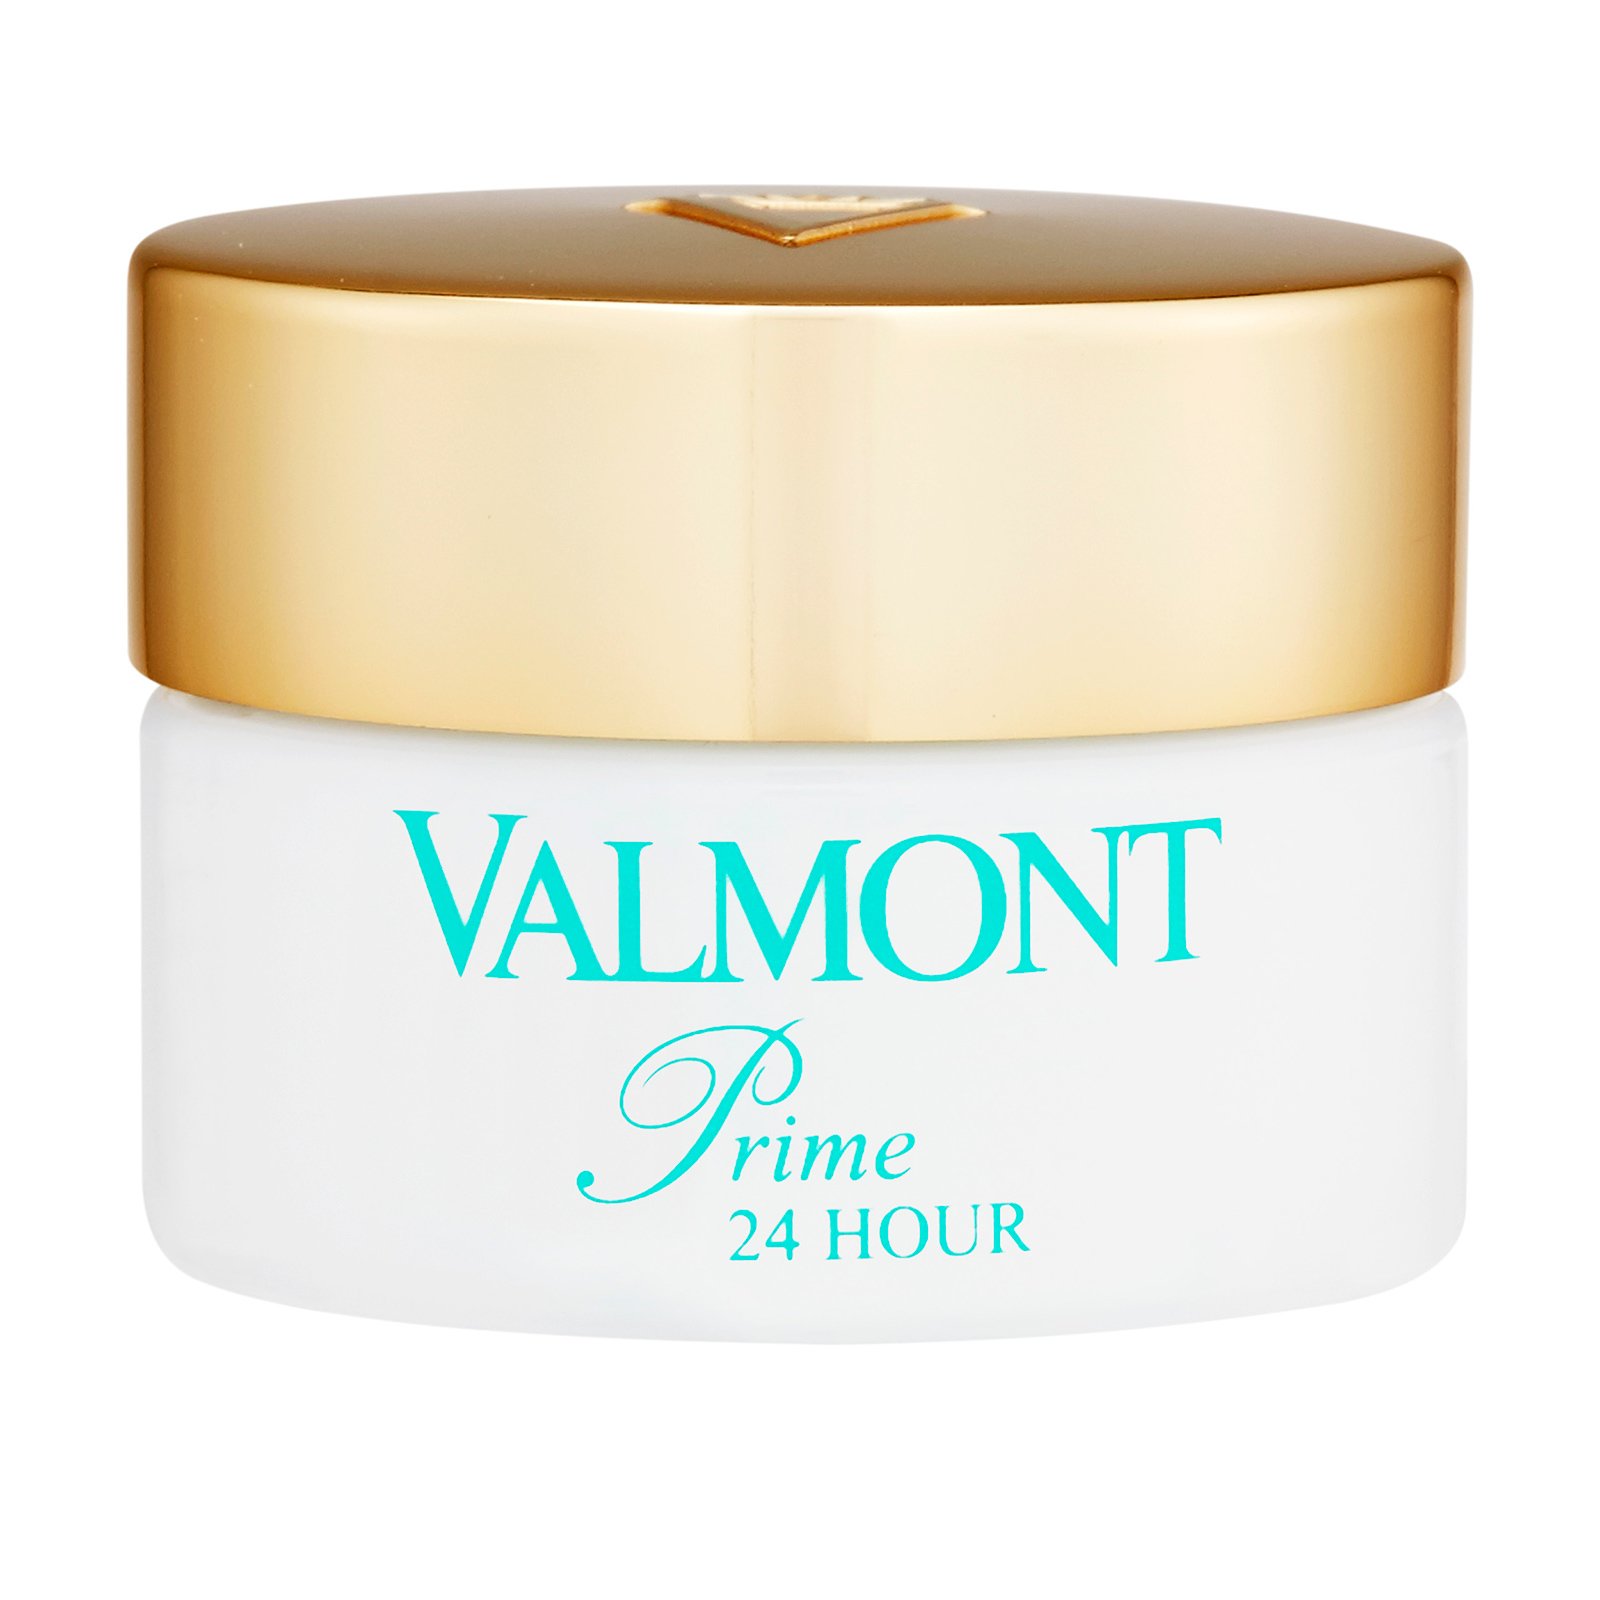 Valmont Prime 24 Hour15 ml 0.51 oz kalista Beauty